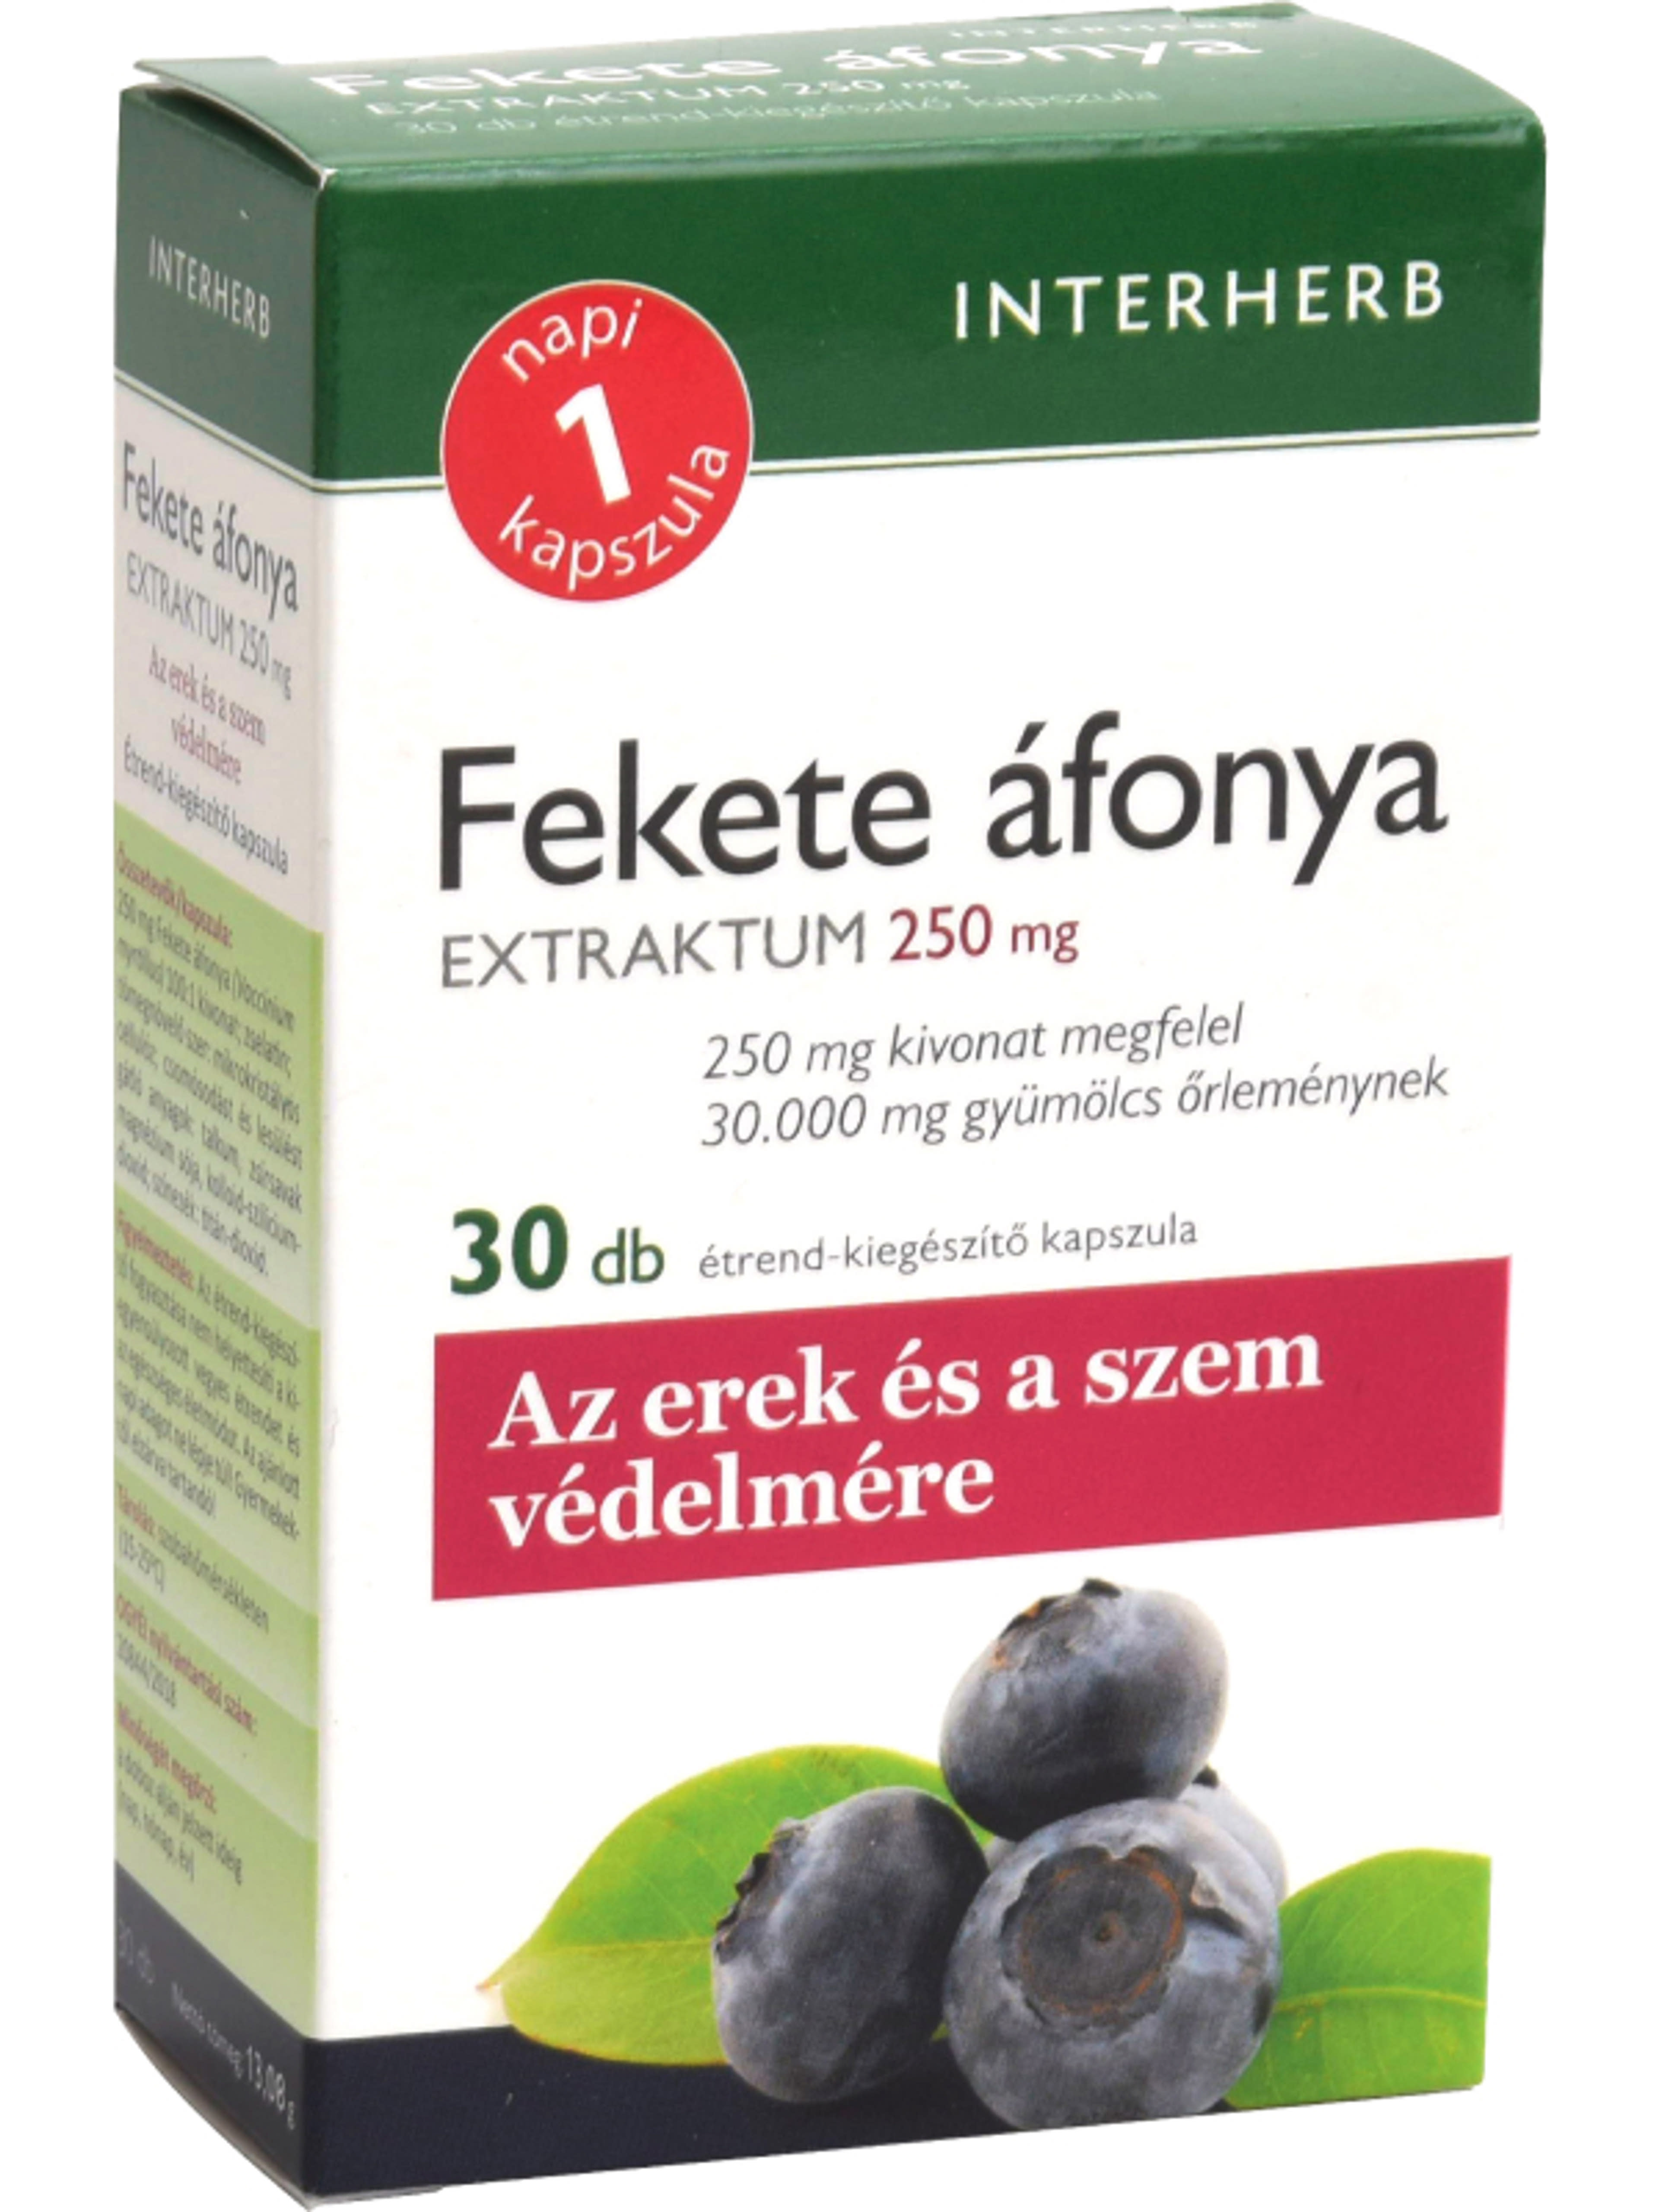 Interherb napi 1 fekete áfonya extraktum 250 mg - 30 db